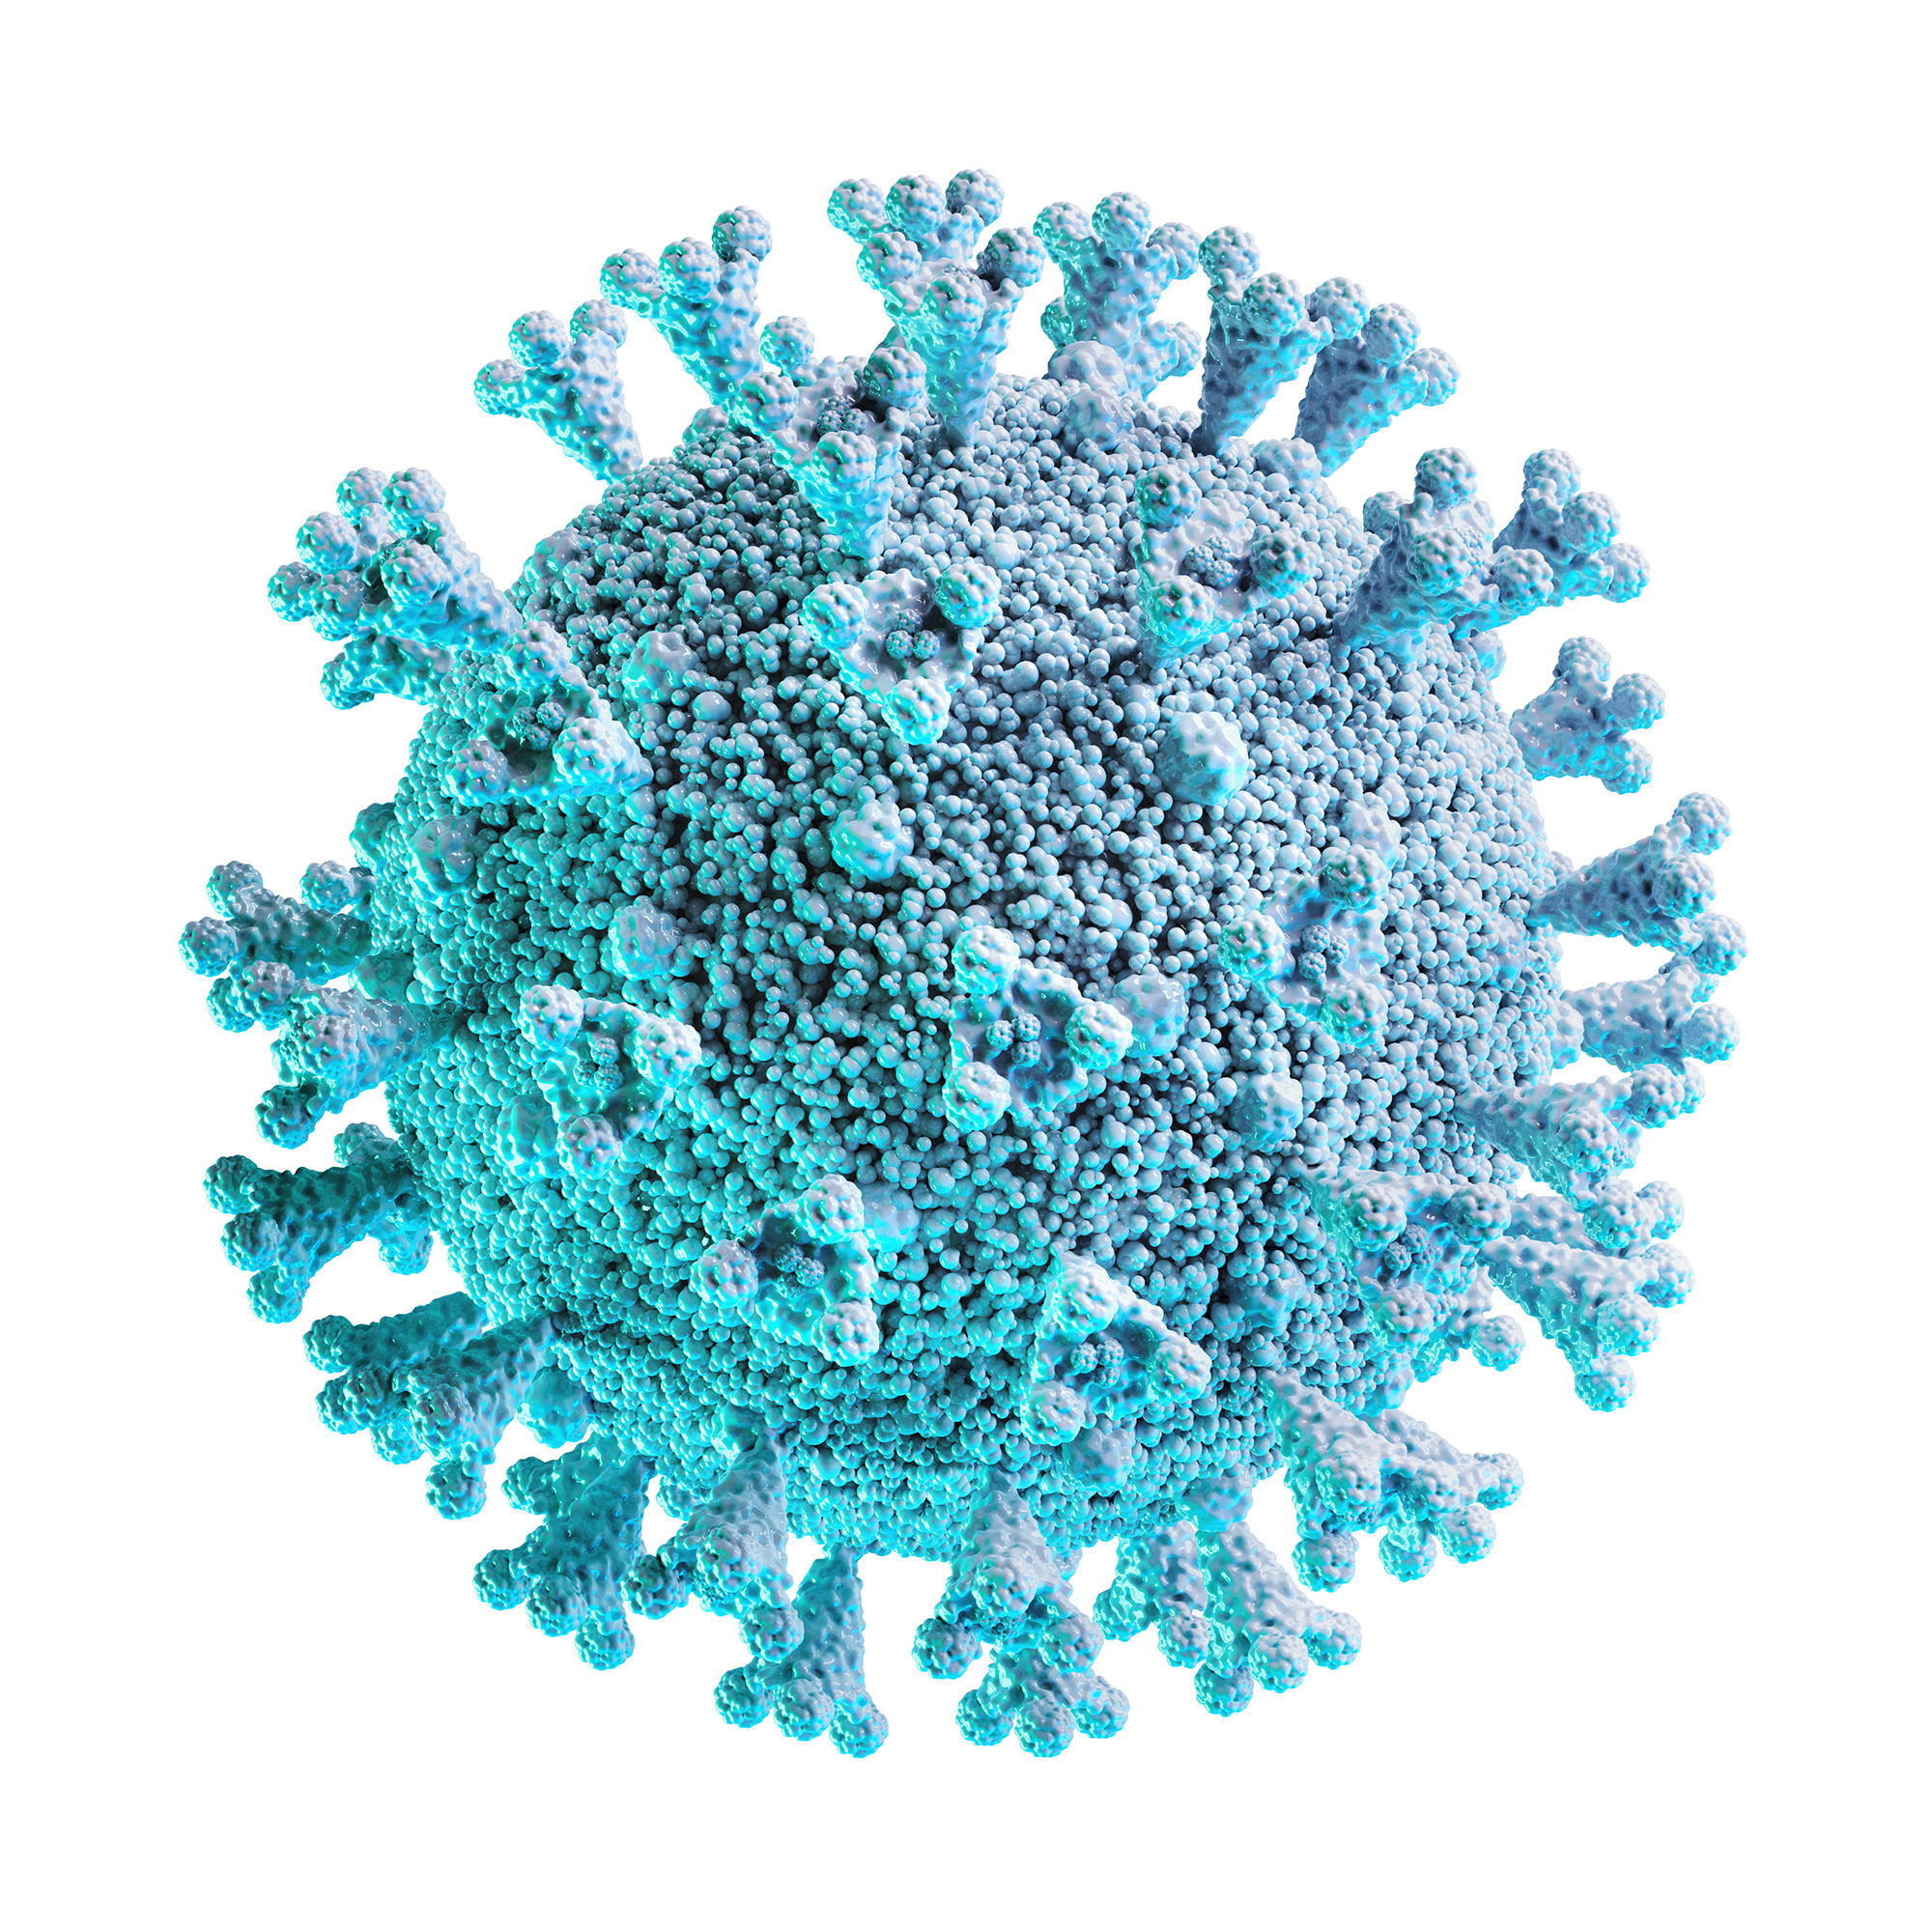 040 5款可商用冠状病毒模型素材Covid-19 Mockup